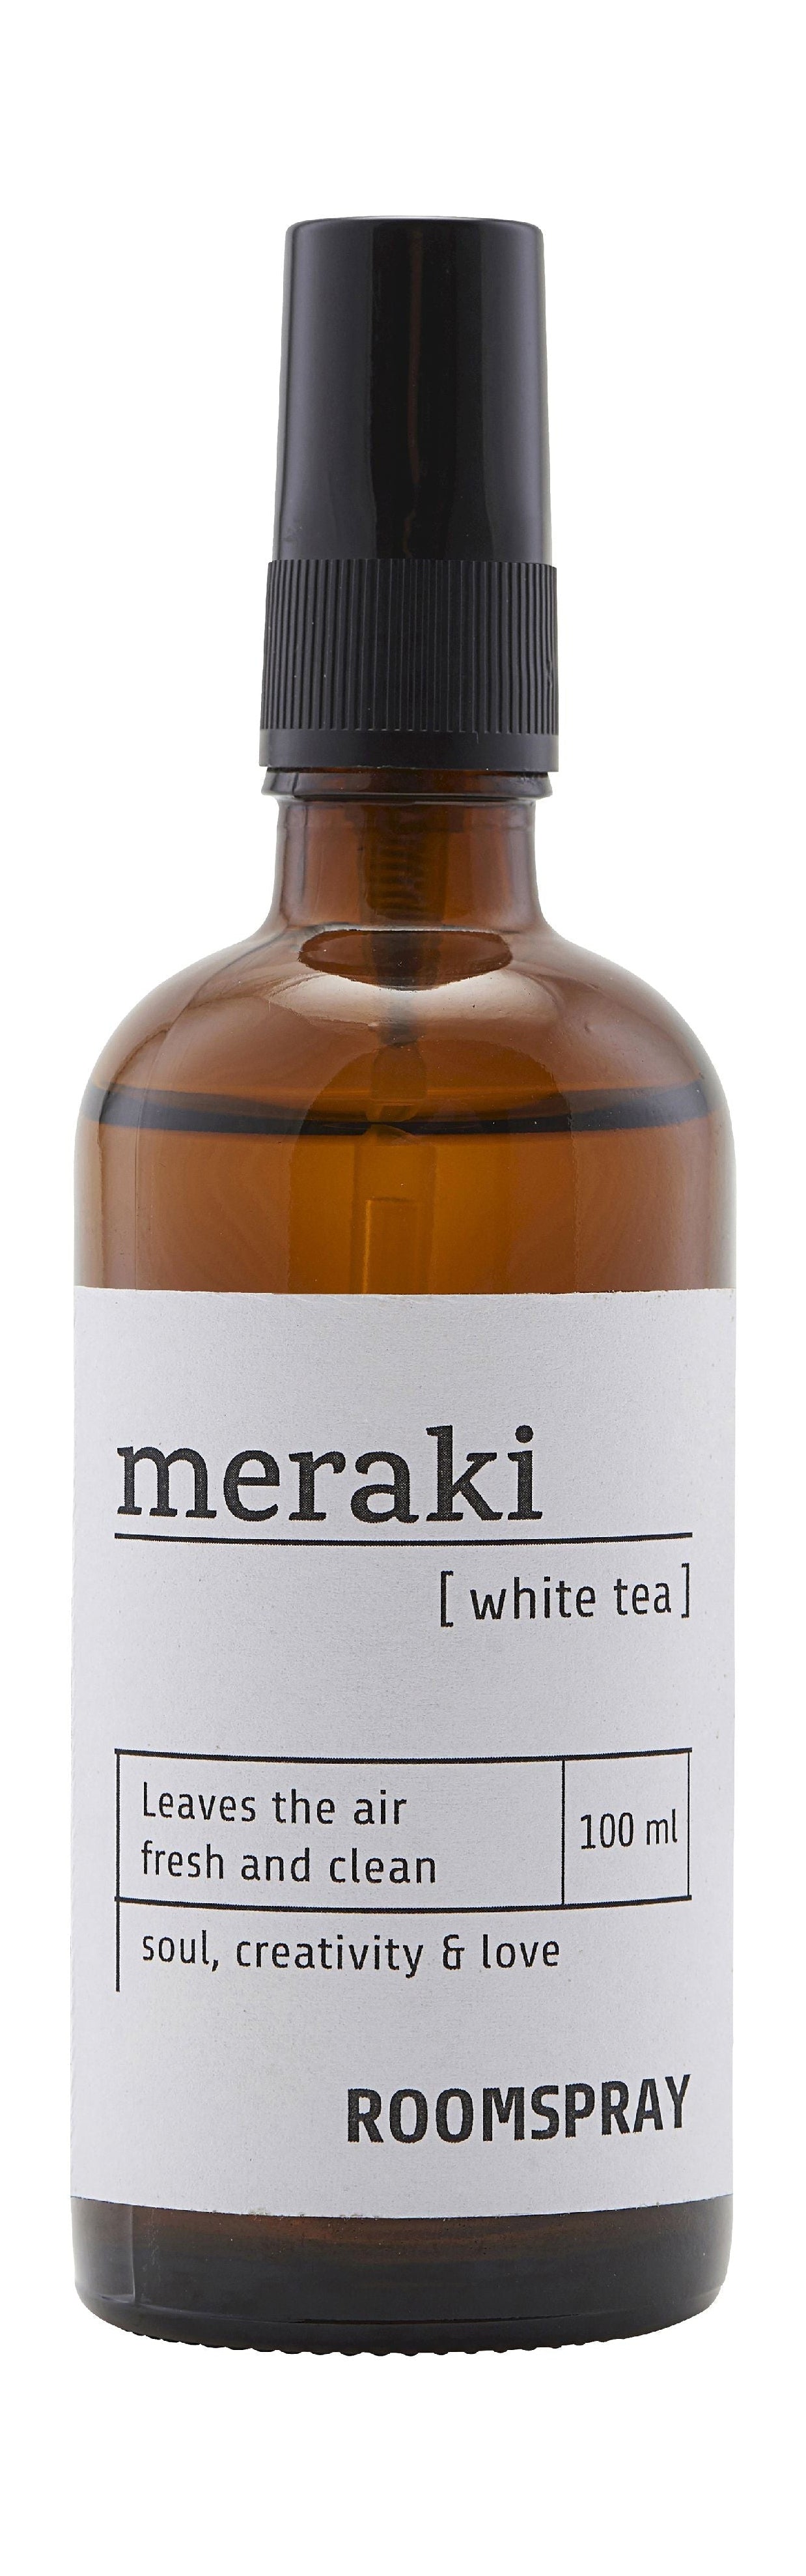 Meraki Roomspray 100 ml, White Tea